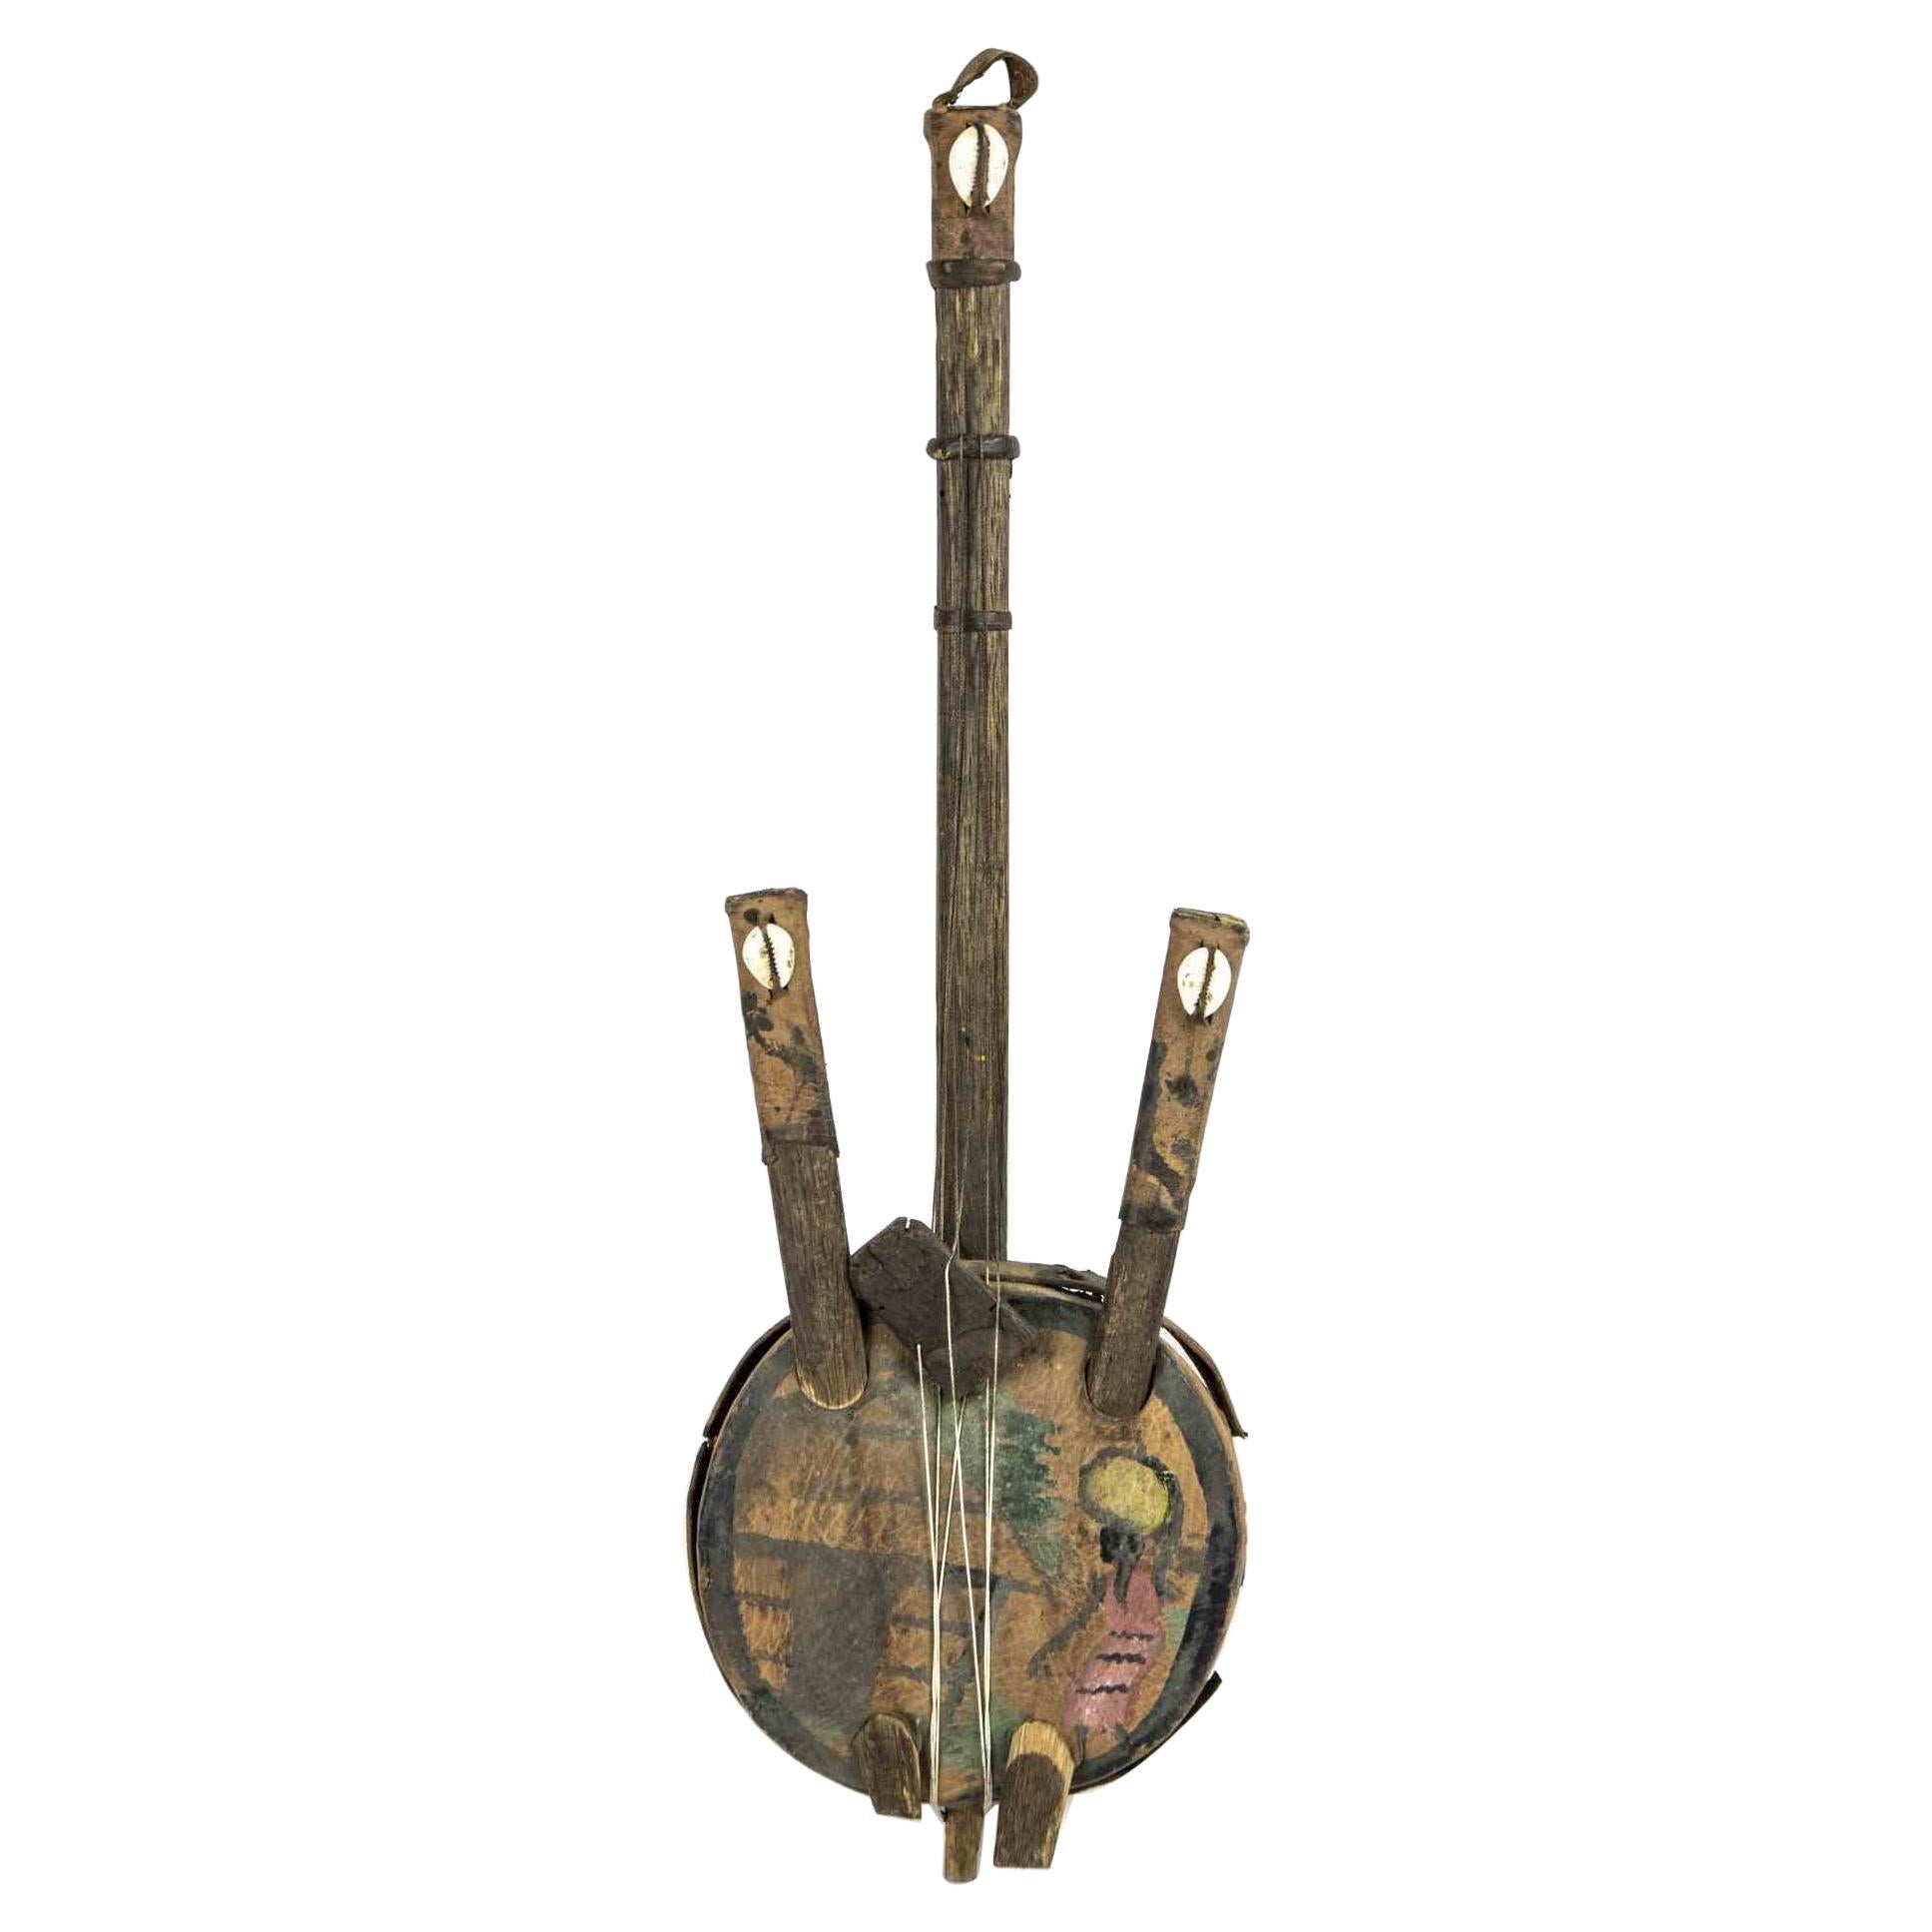 Ethnic Musical Instrument, Mid-20th Century